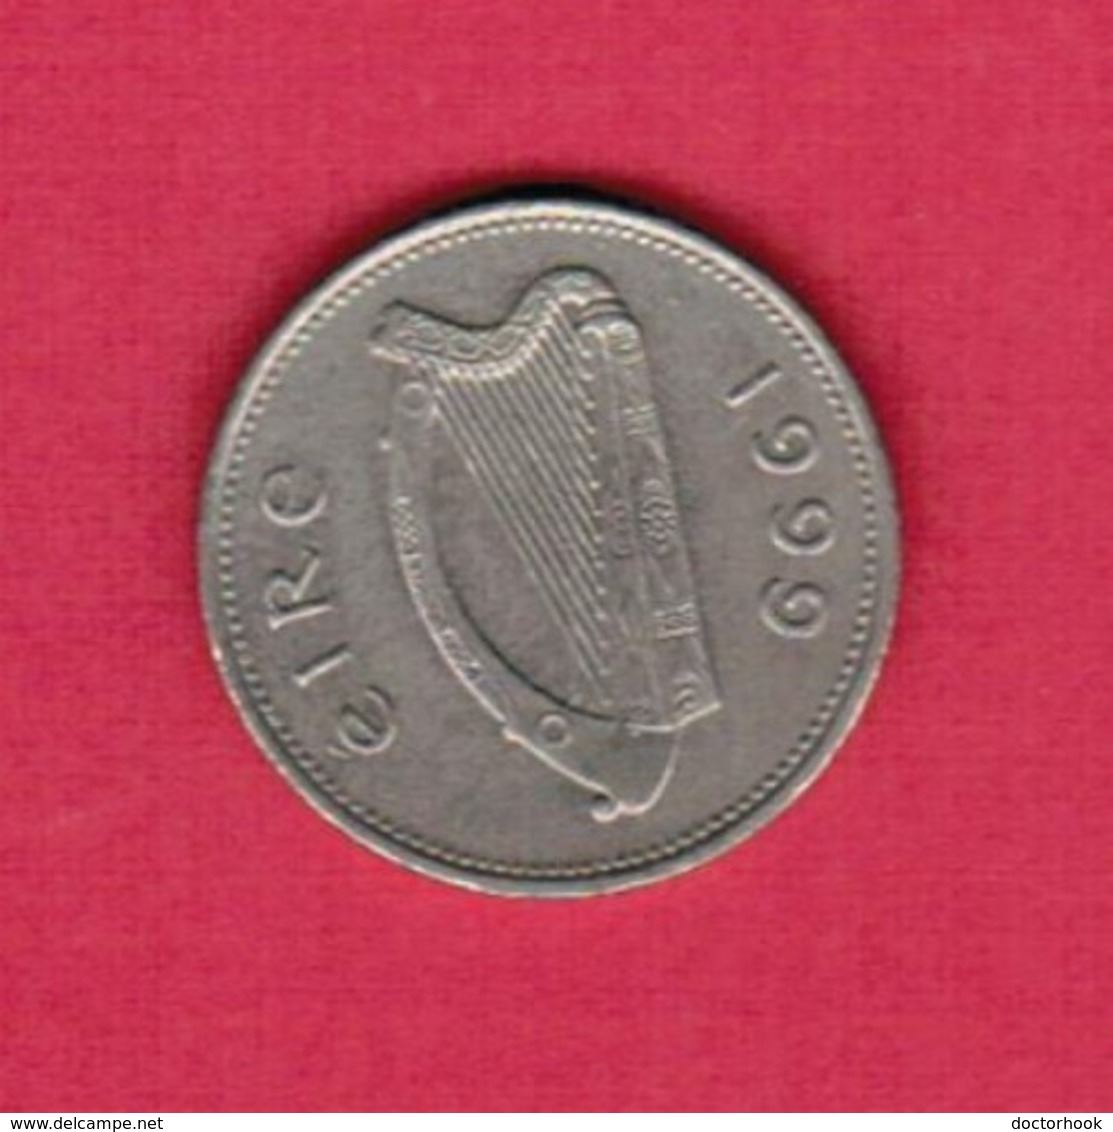 IRELAND   10 PENCE 1999 (KM # 29) #5217 - Irland